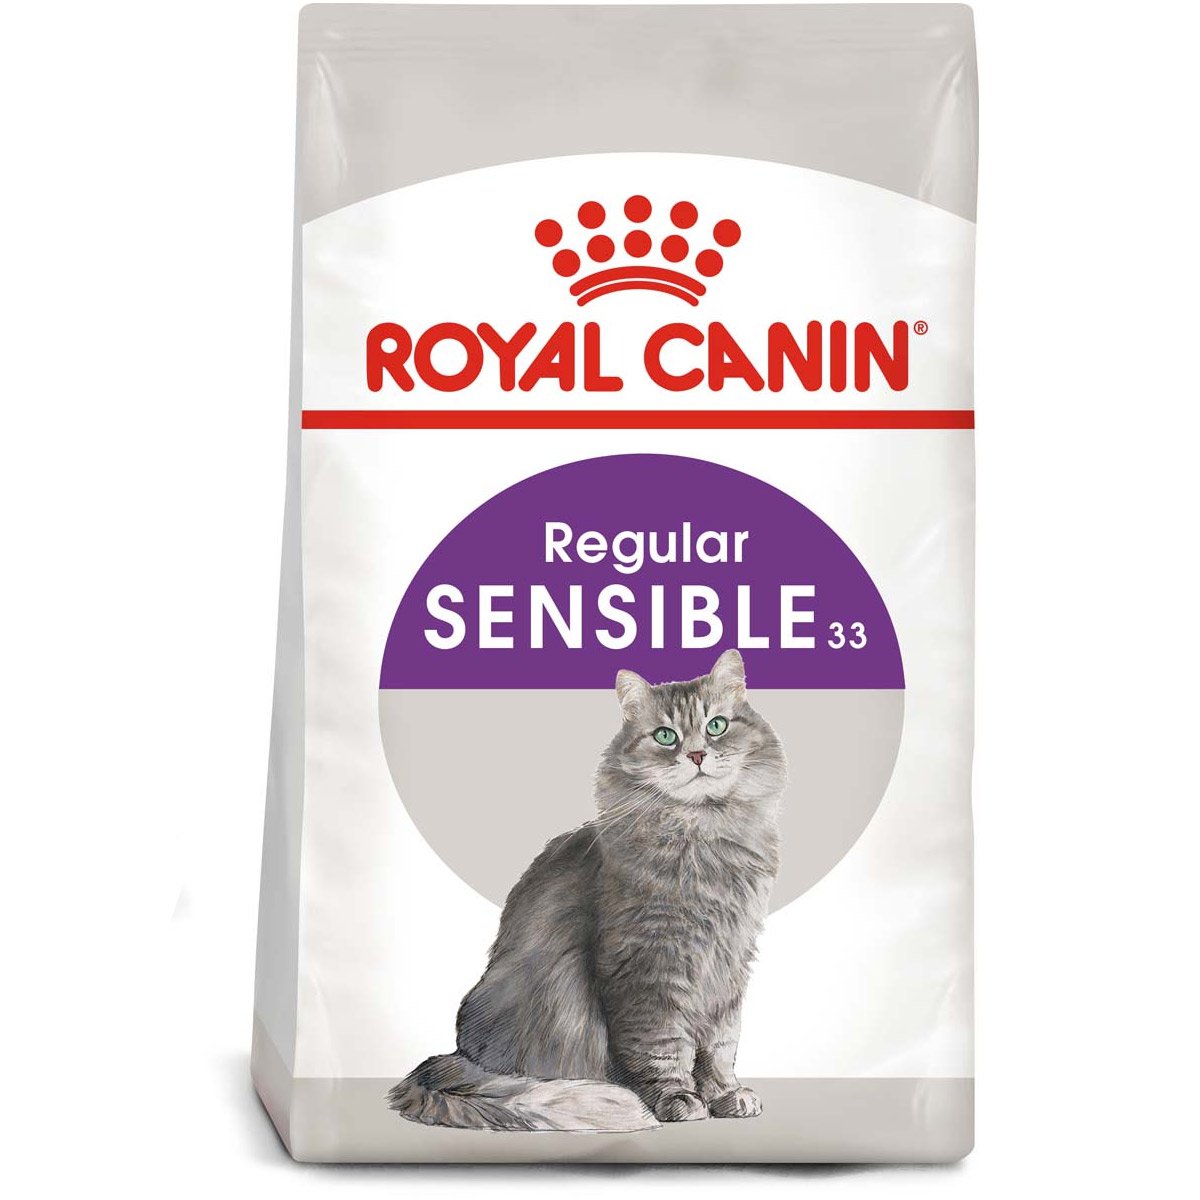 ROYAL CANIN SENSIBLE Trockenfutter für sensible Katzen 10kg von Royal Canin